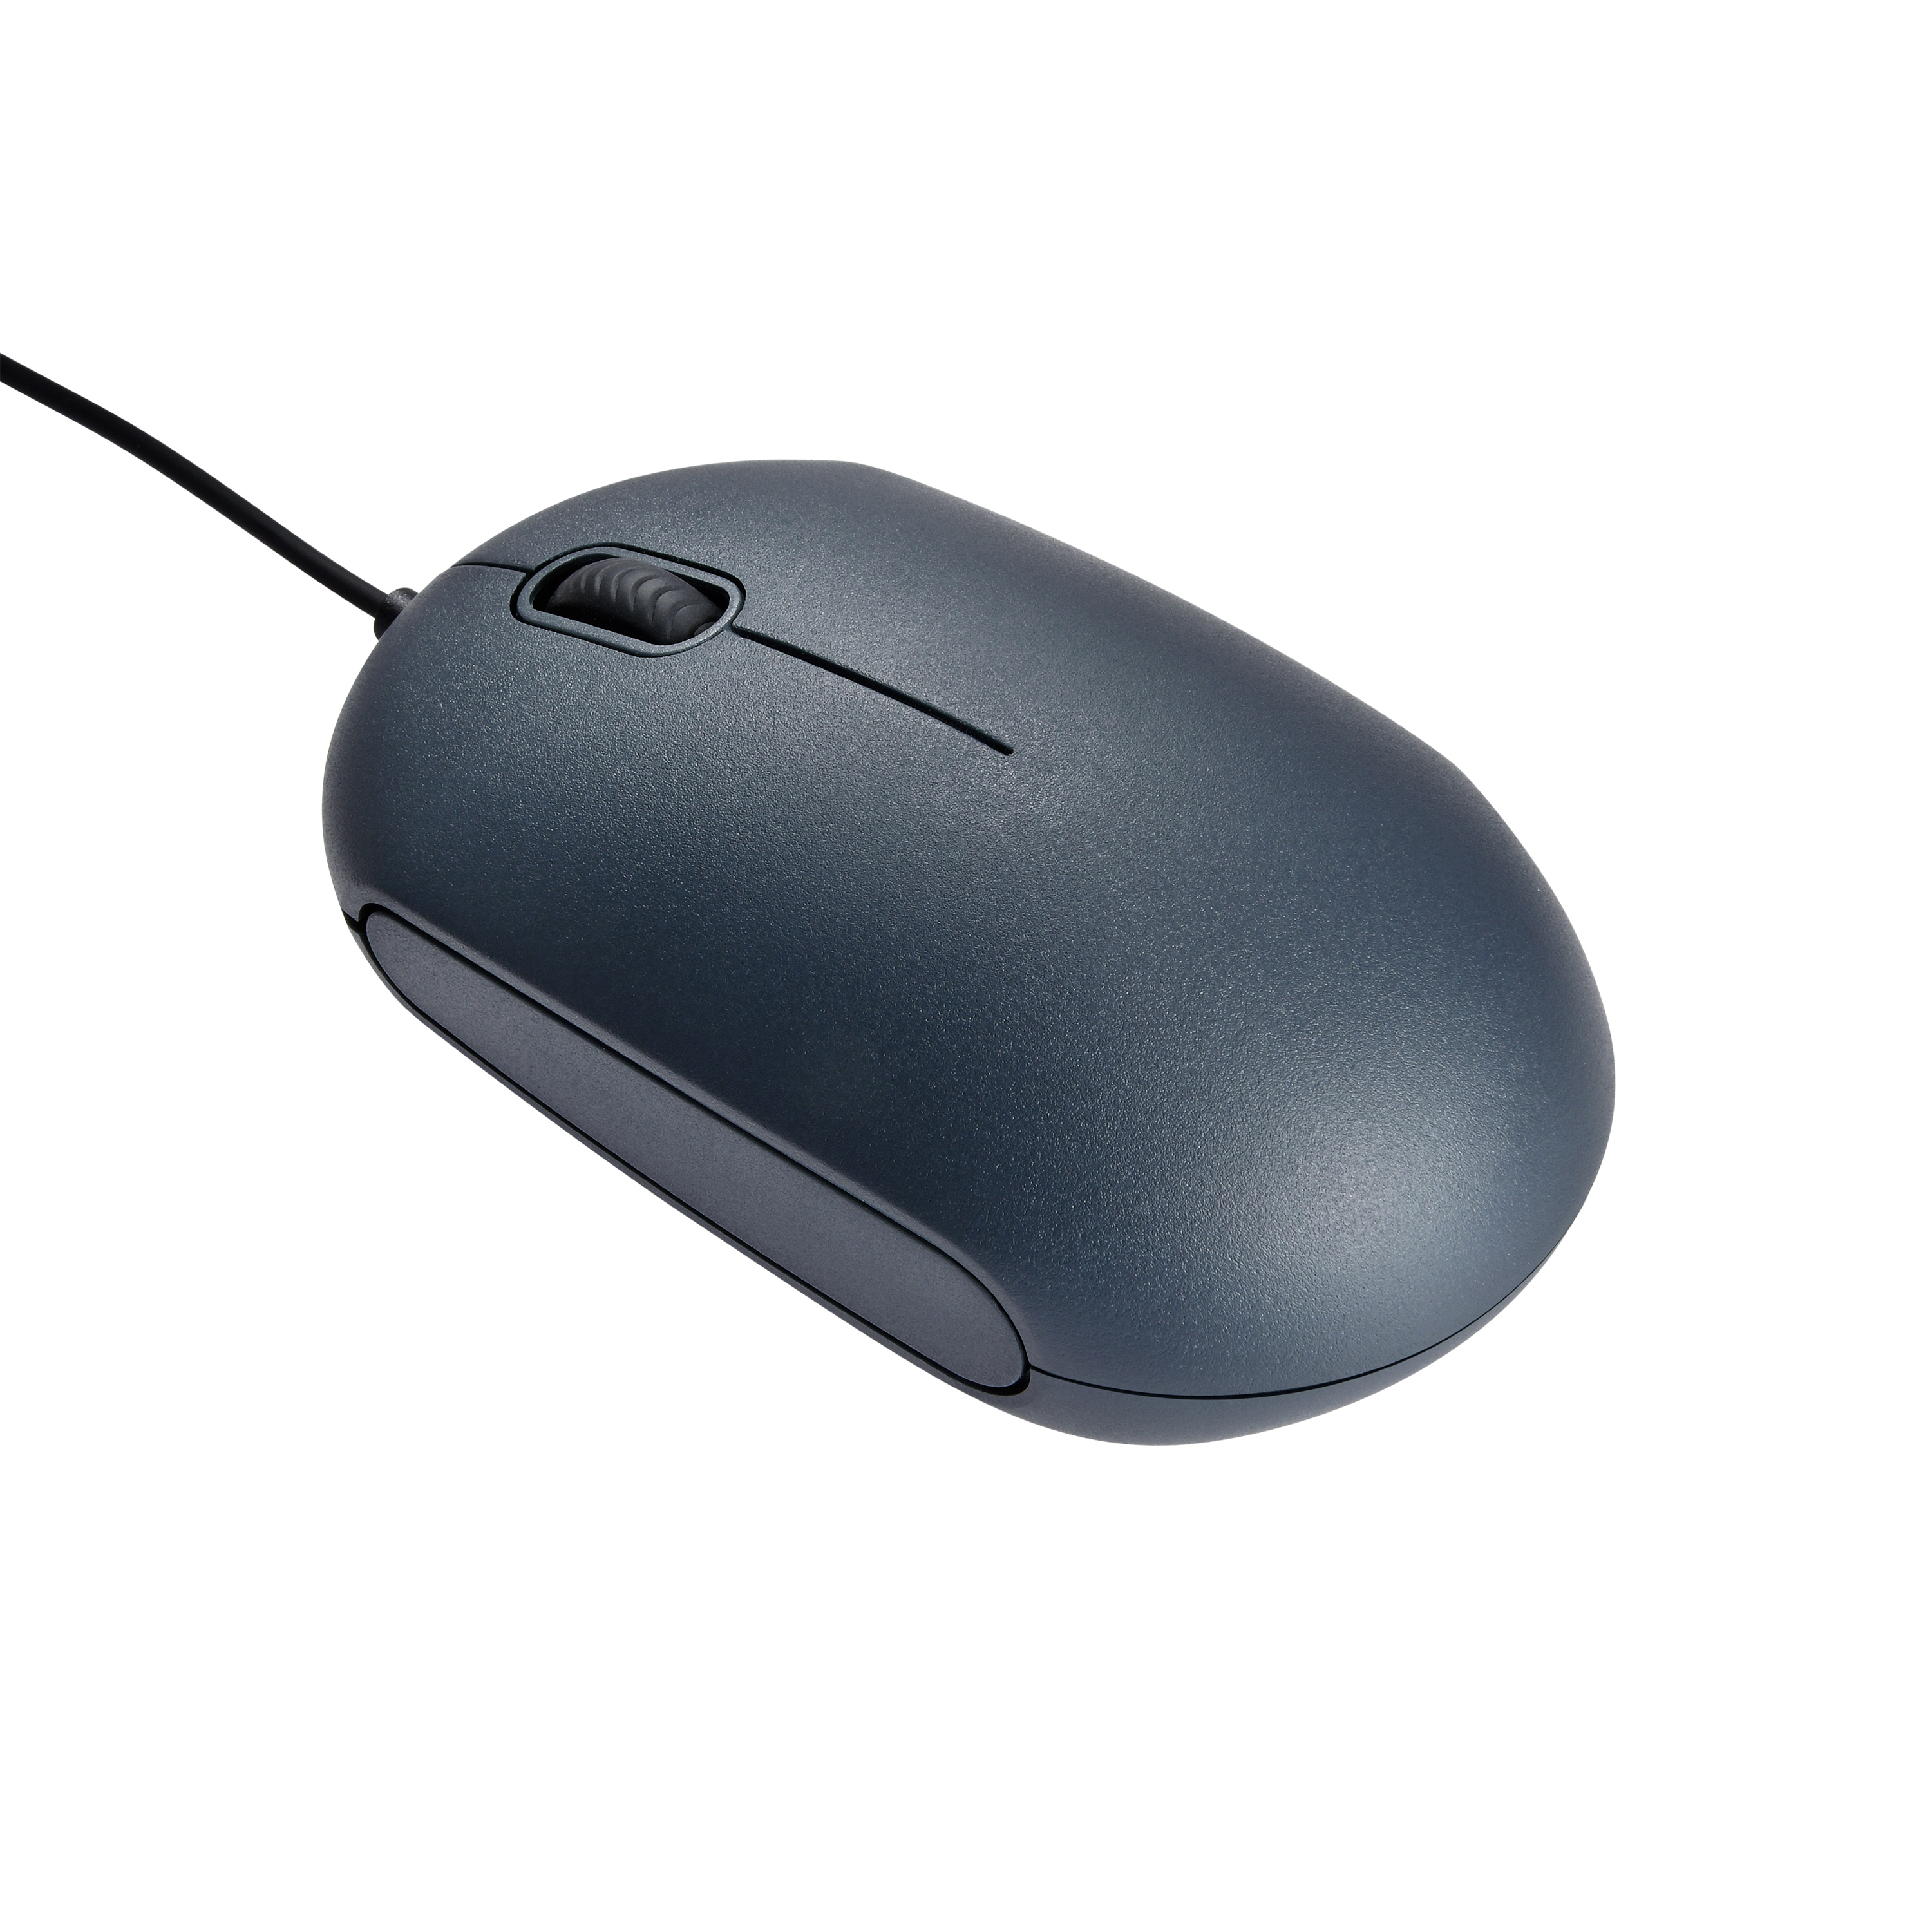 onn. USB Optical Ambidextrous Mouse, USB Nano Receiver, Black - image 2 of 12